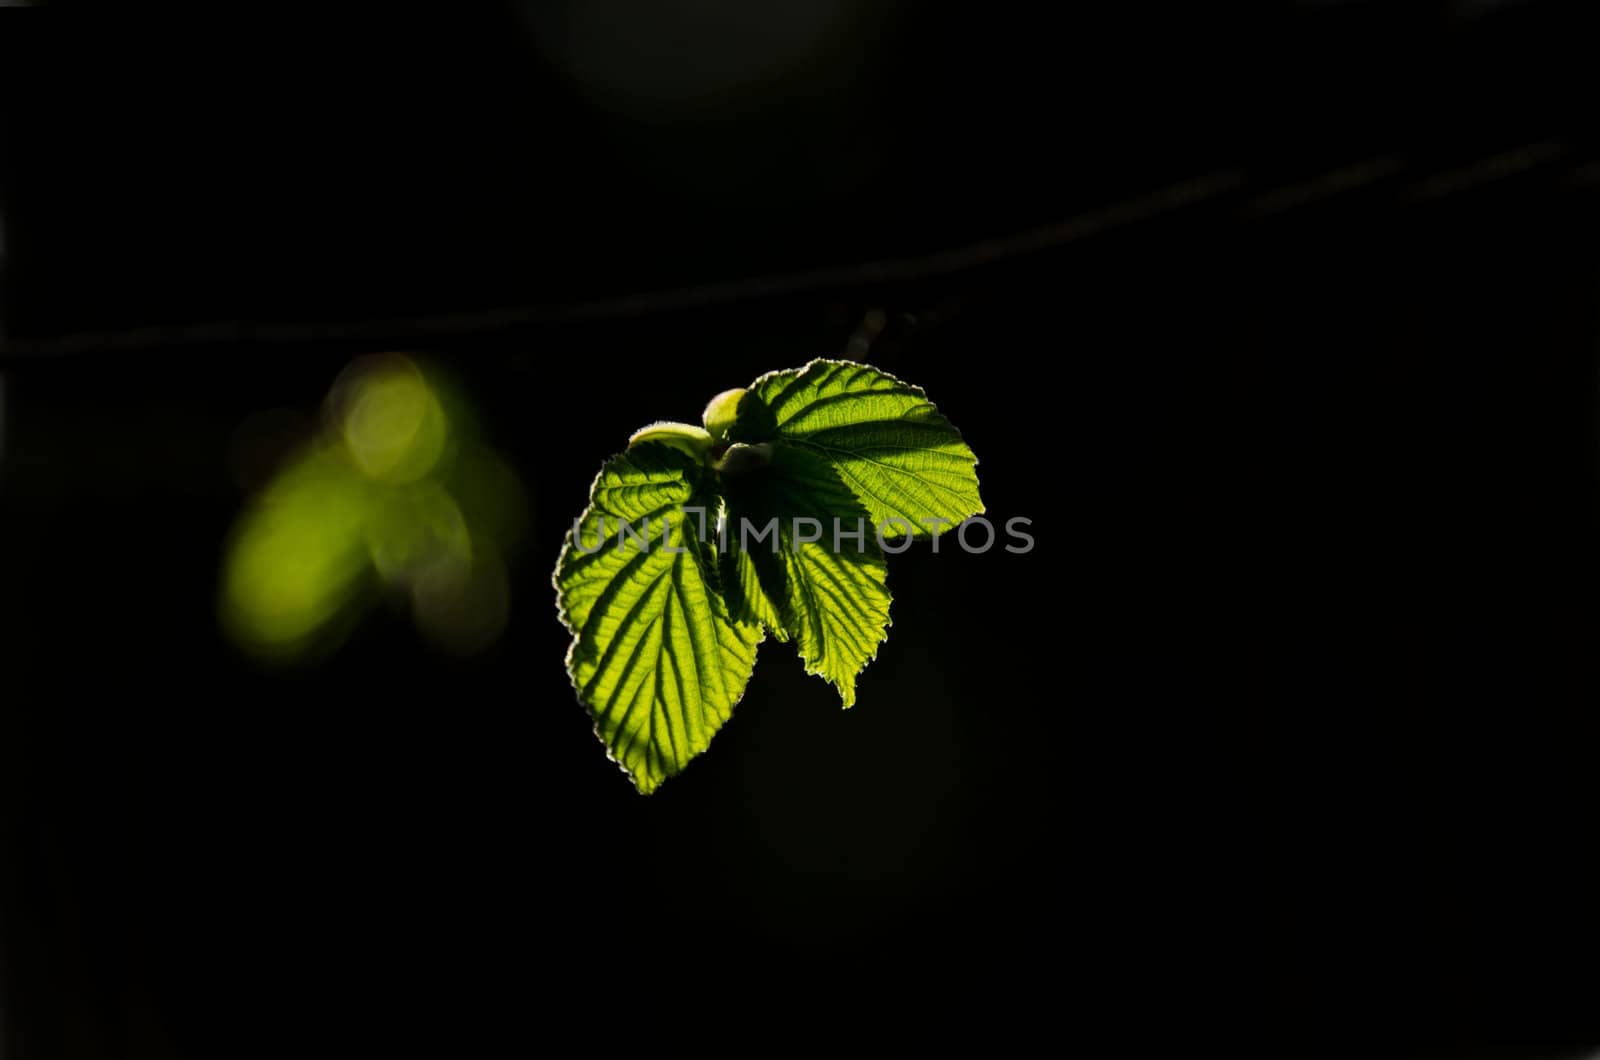 charm leaf in spring